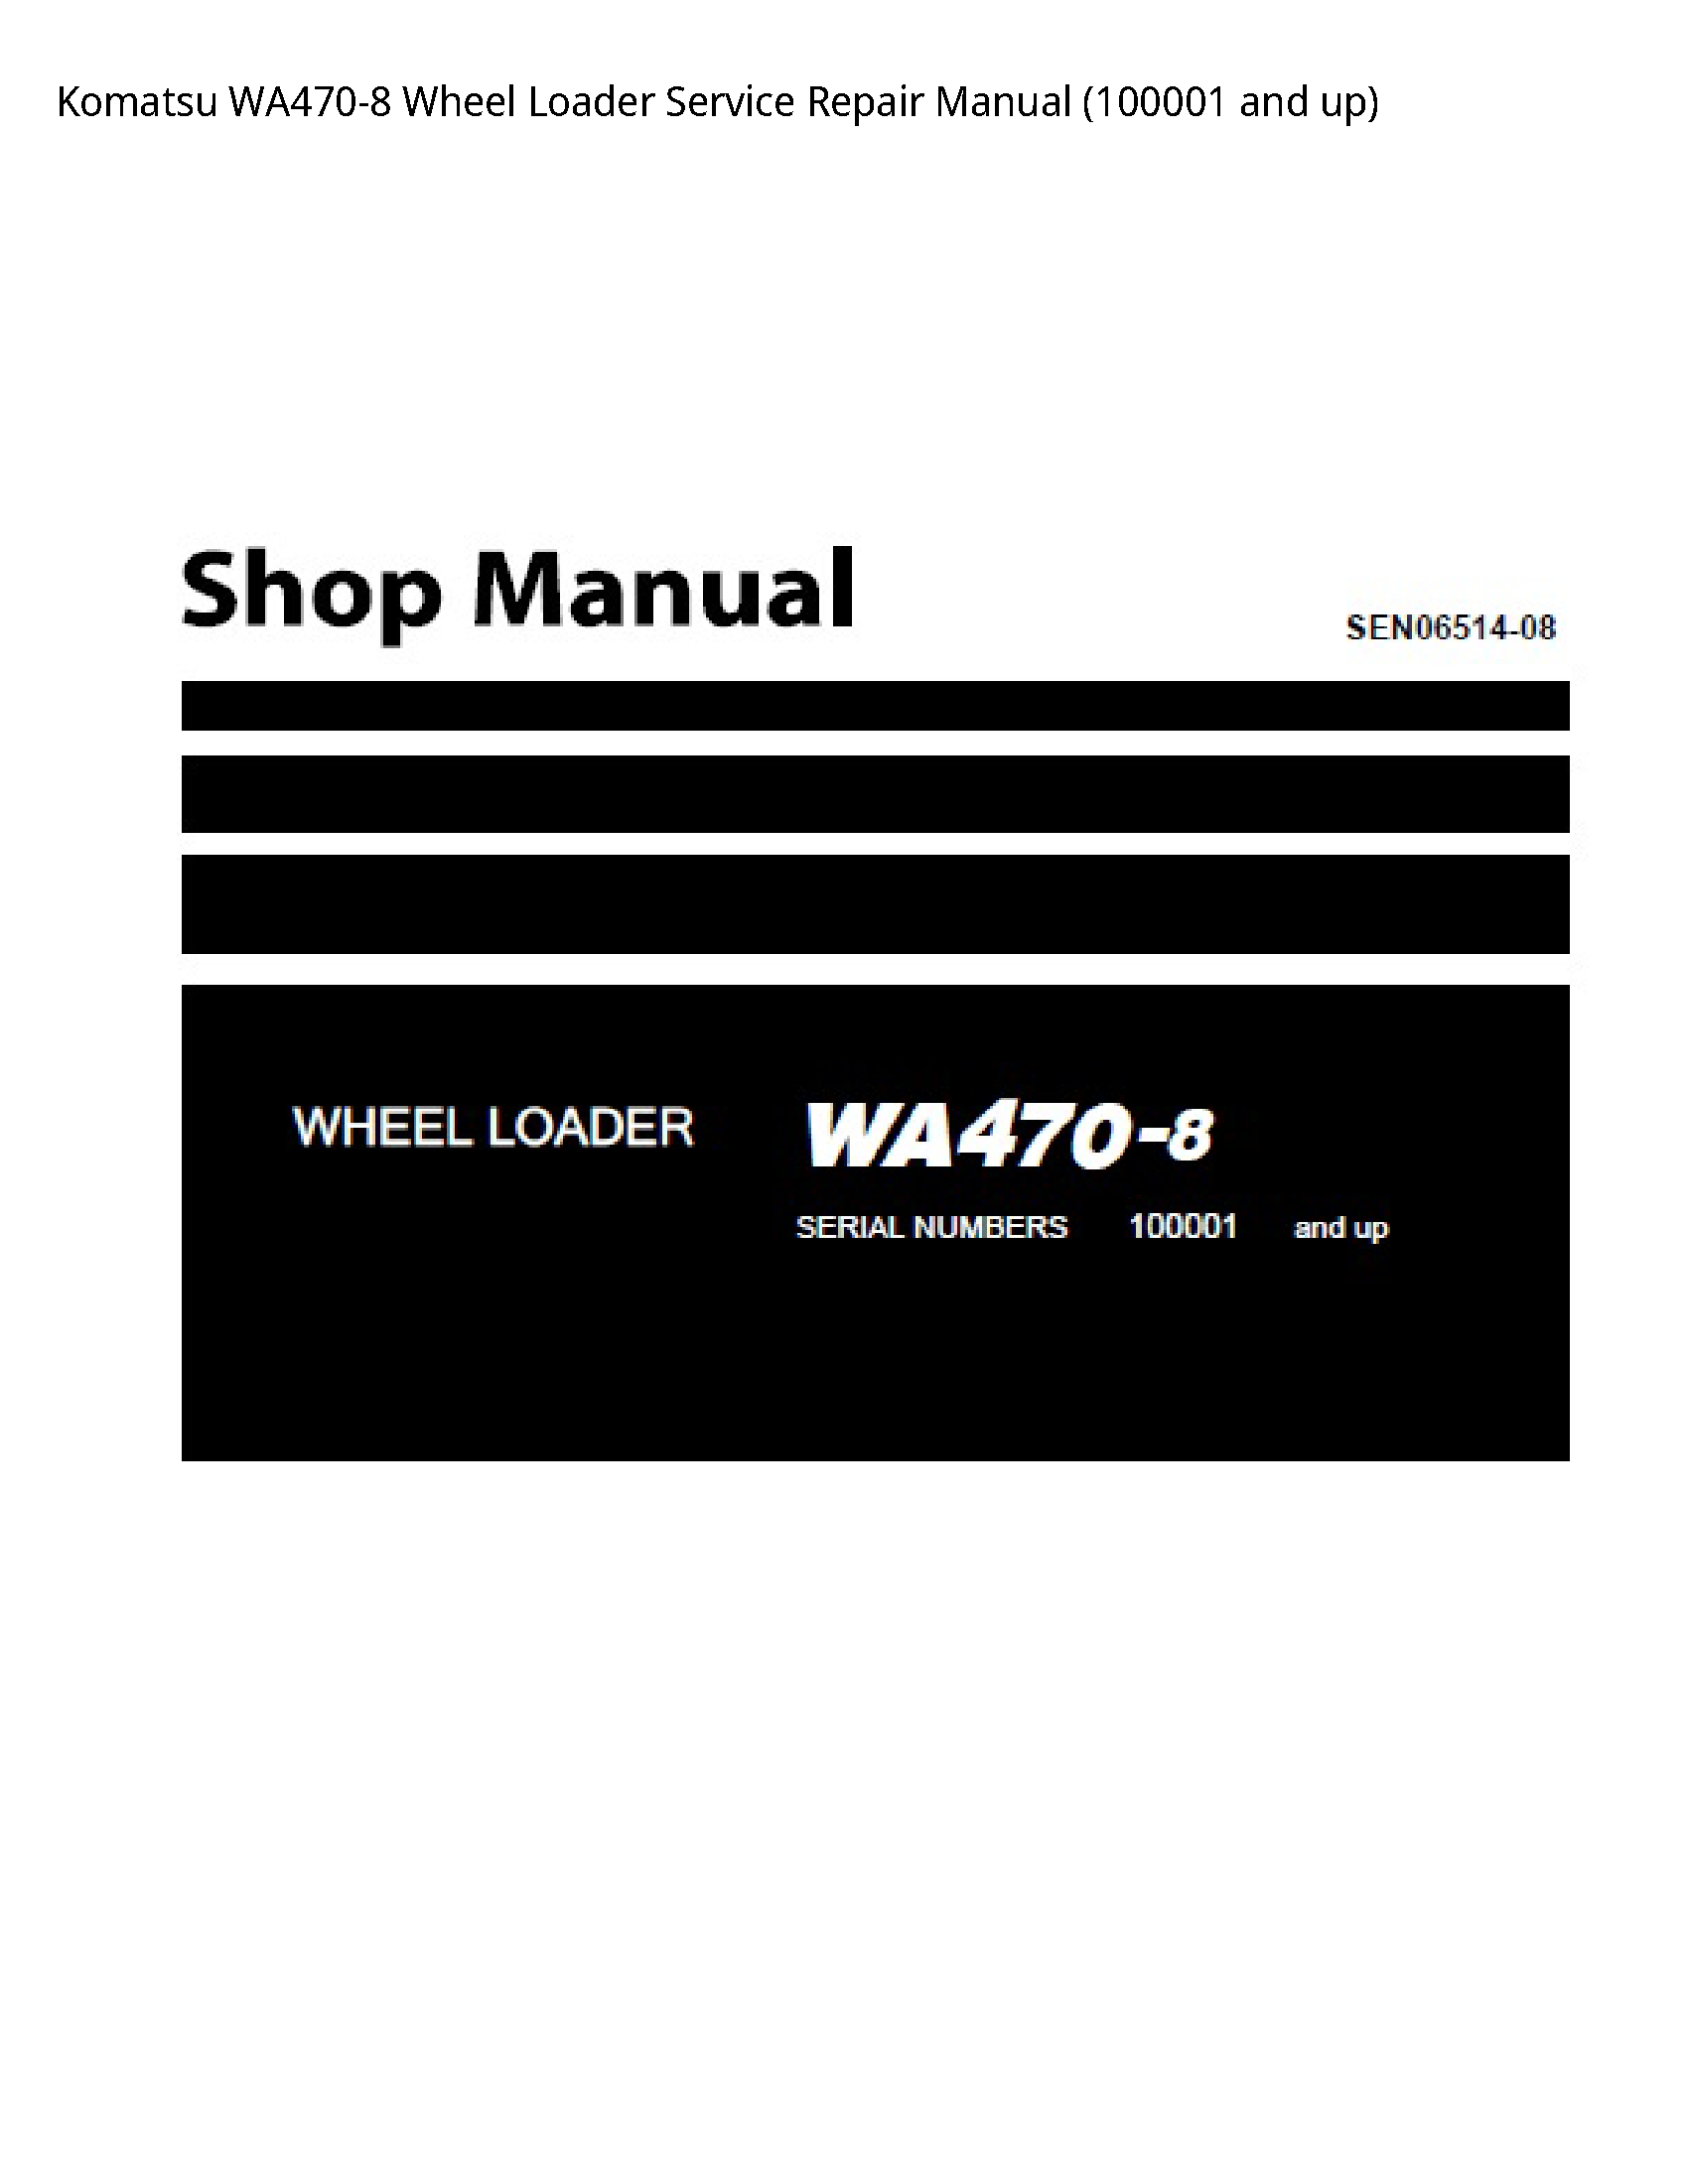 KOMATSU WA470-8 Wheel Loader manual